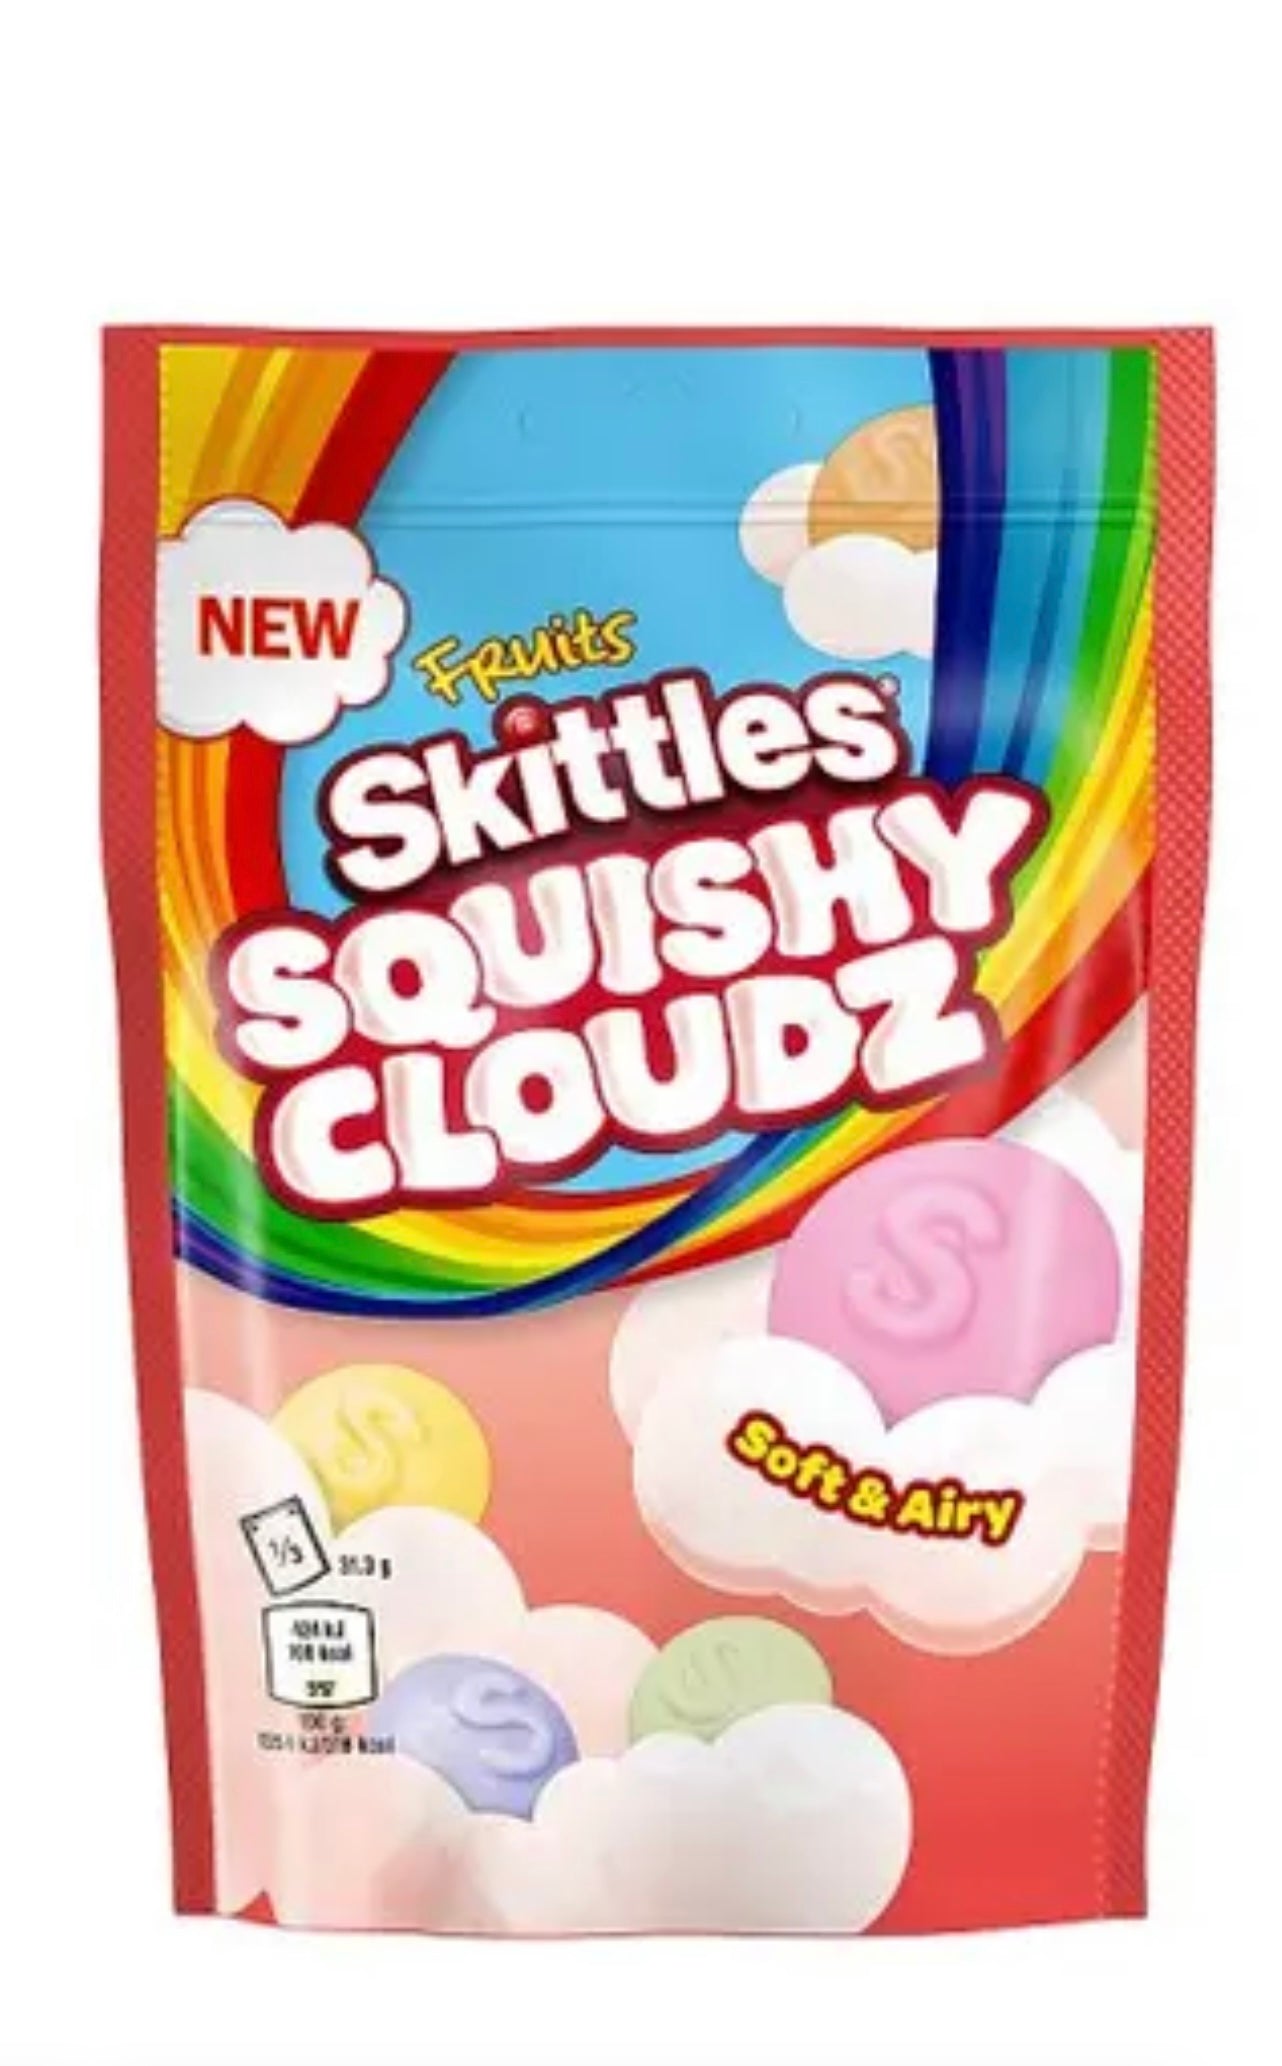 Skittles Squishy Cloudz Fruits 🇬🇧